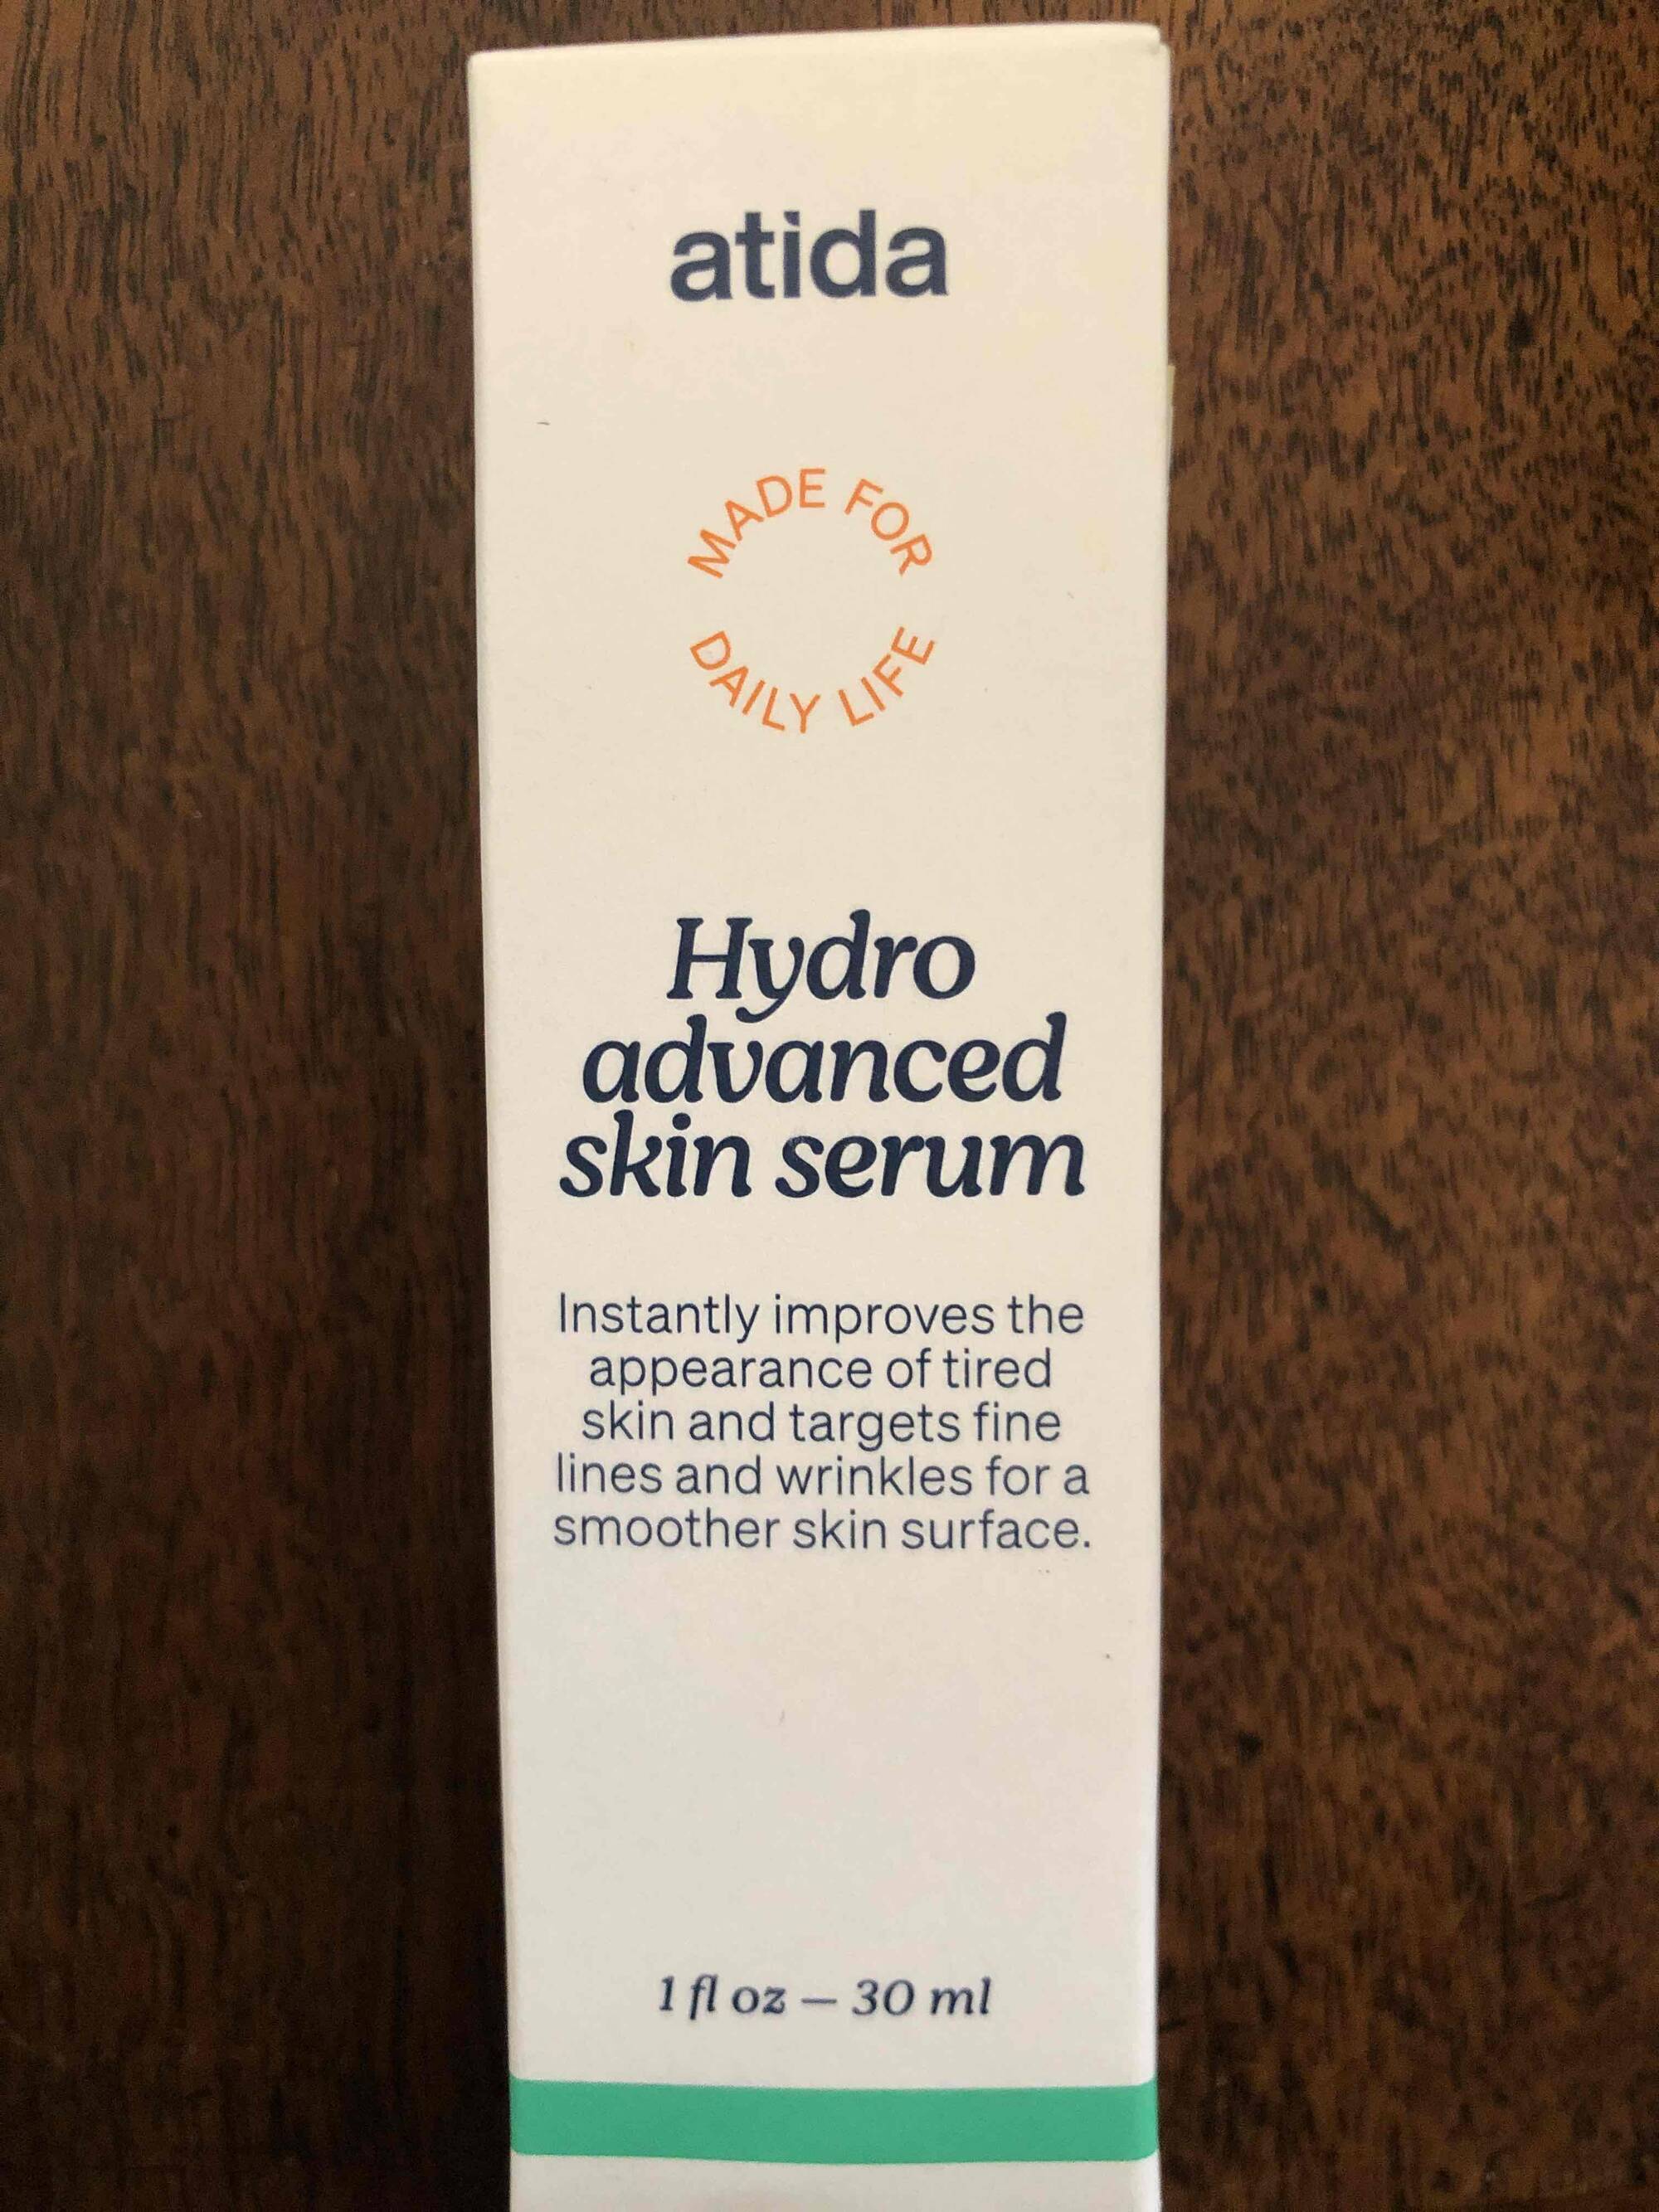 ATIDA - Hydro advanced skin serum 